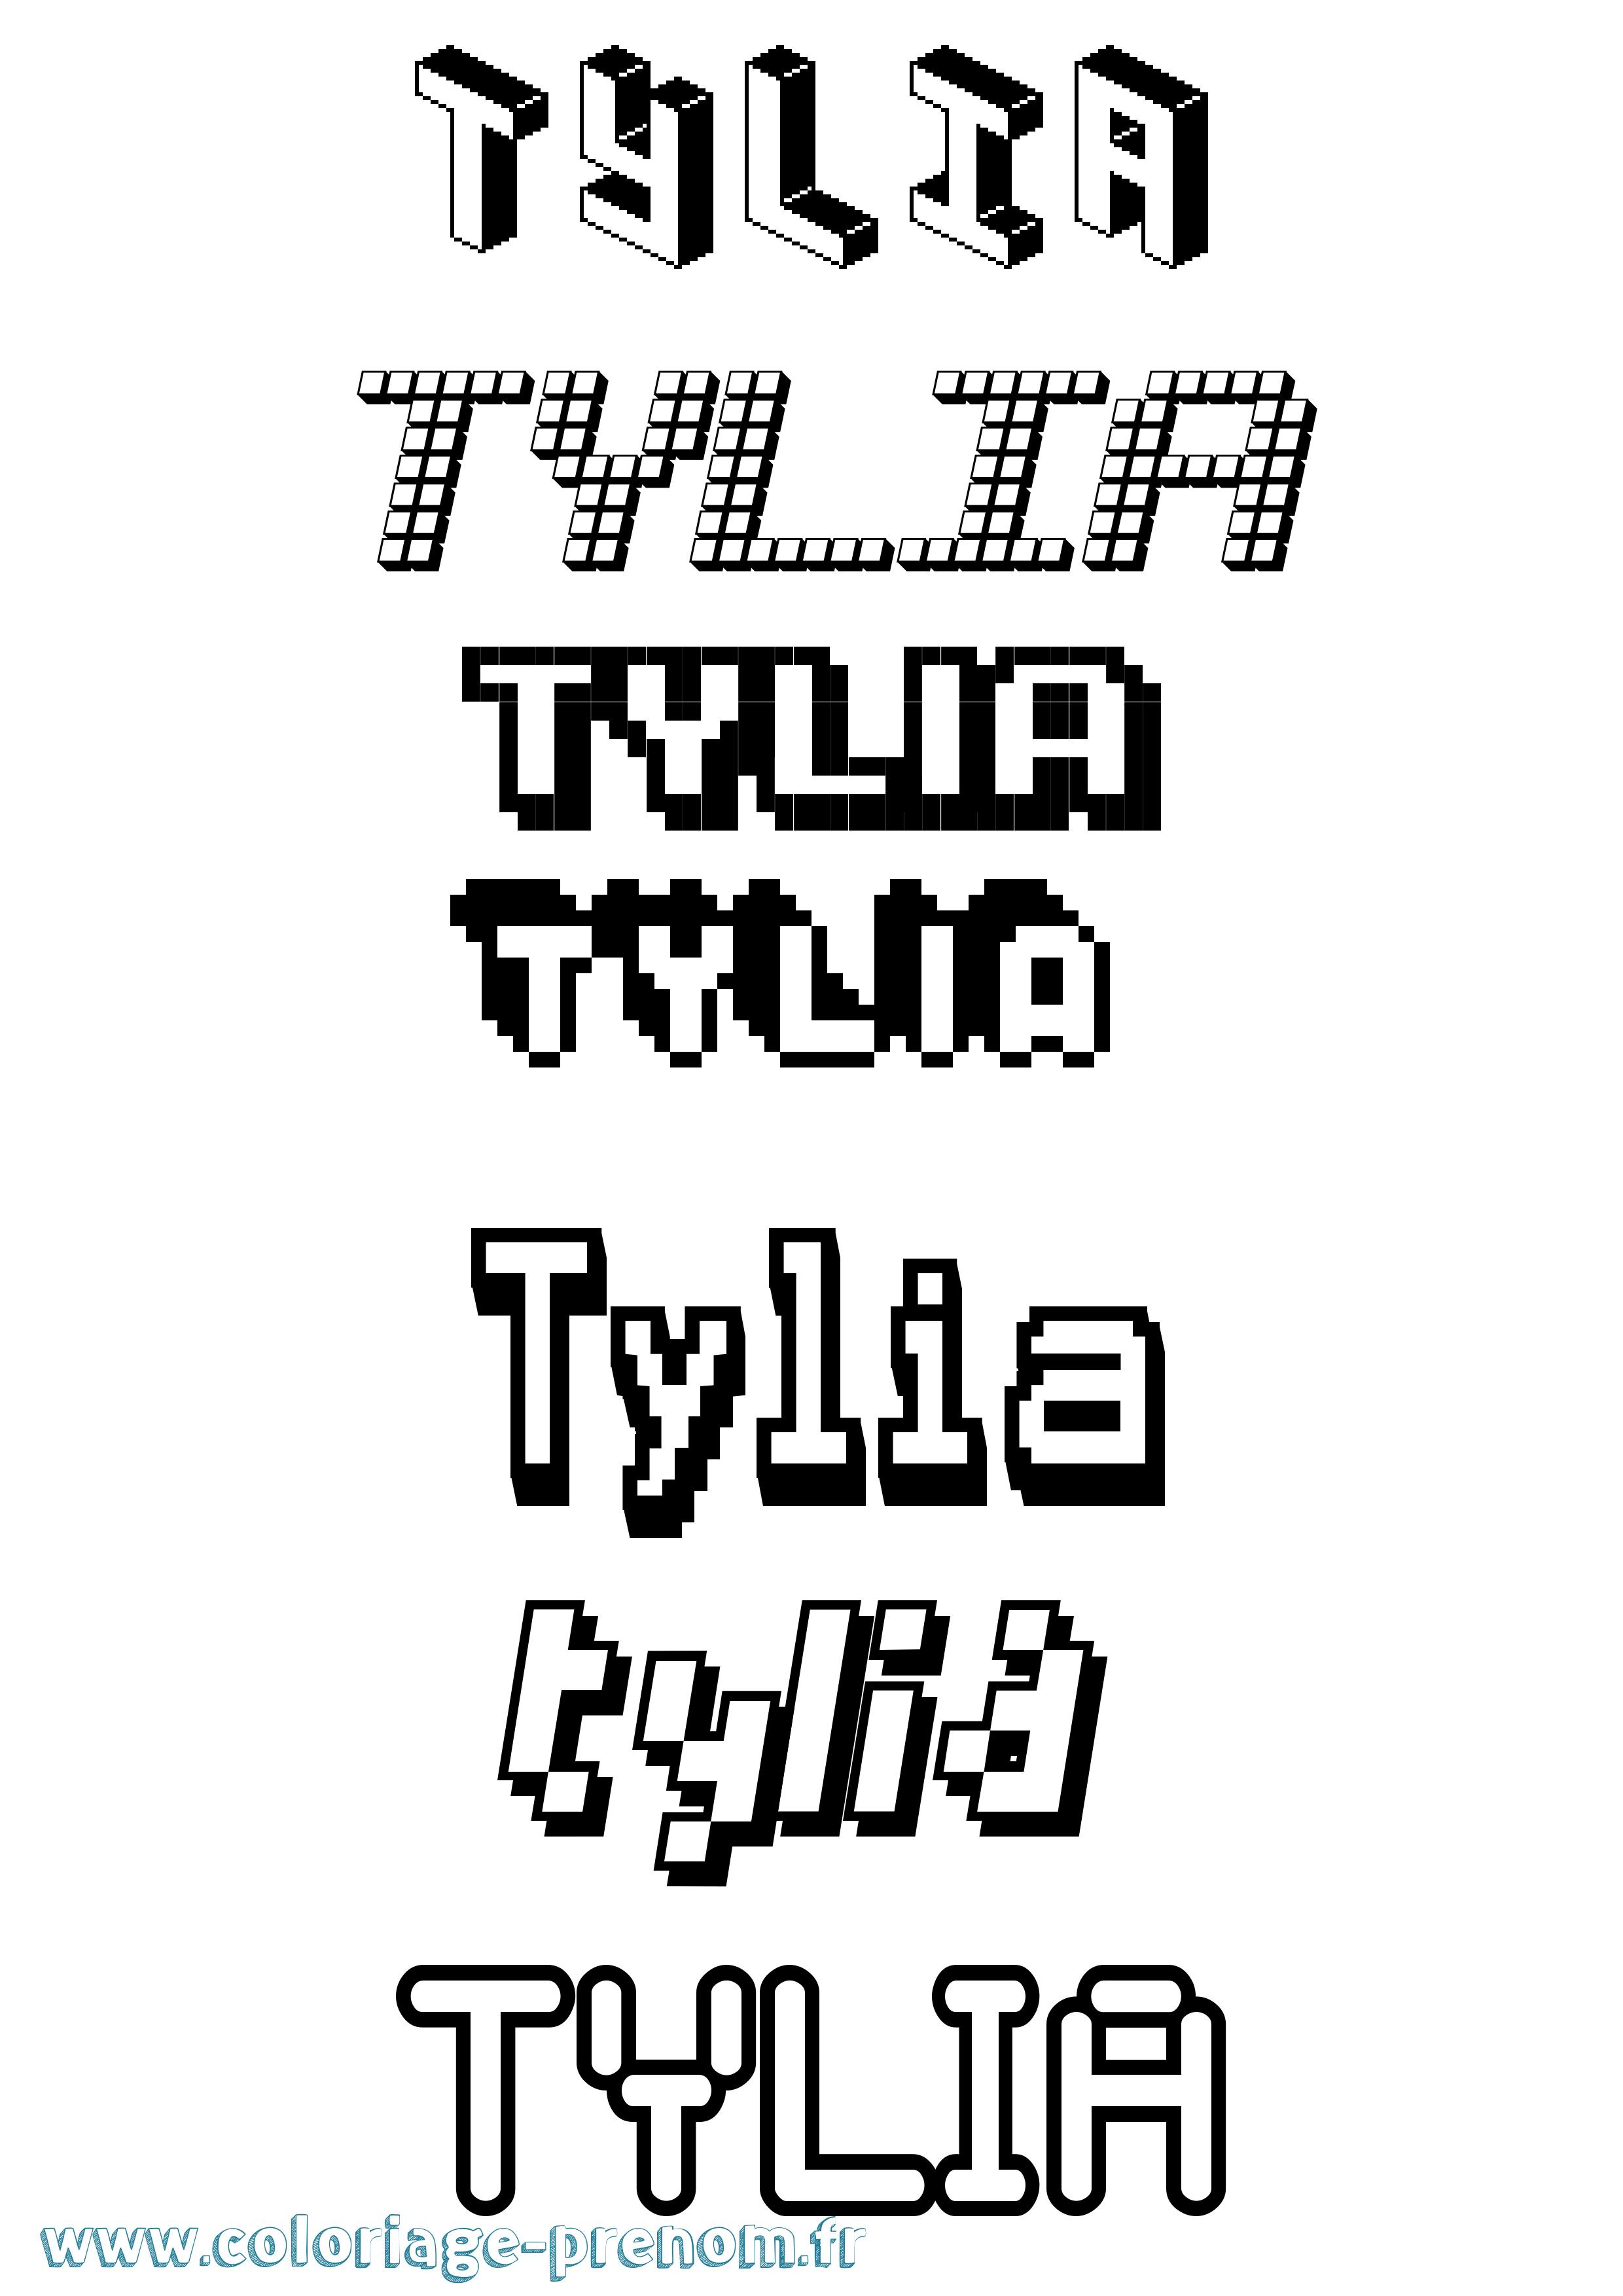 Coloriage prénom Tylia Pixel